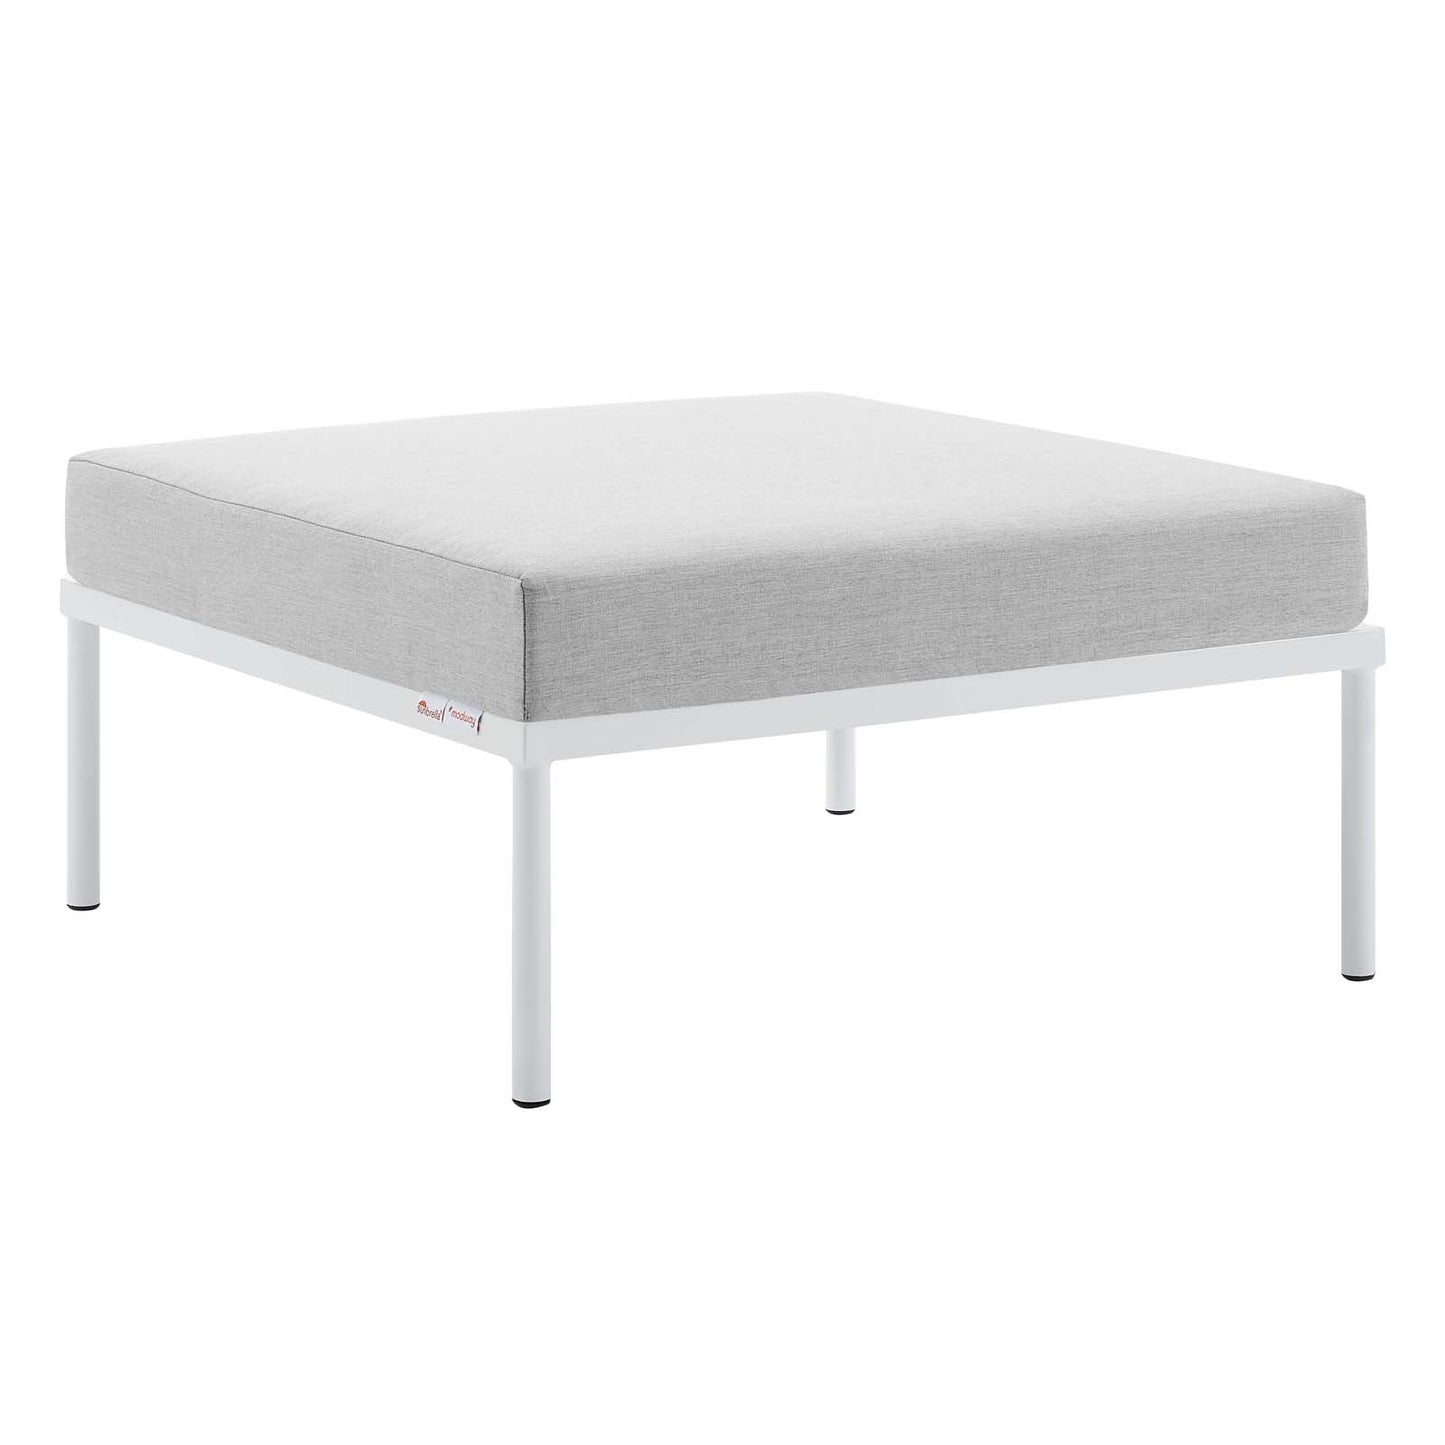 Harmony 10-Piece  Sunbrella® Outdoor Patio Aluminum Sectional Sofa Set White Gray EEI-4952-WHI-GRY-SET